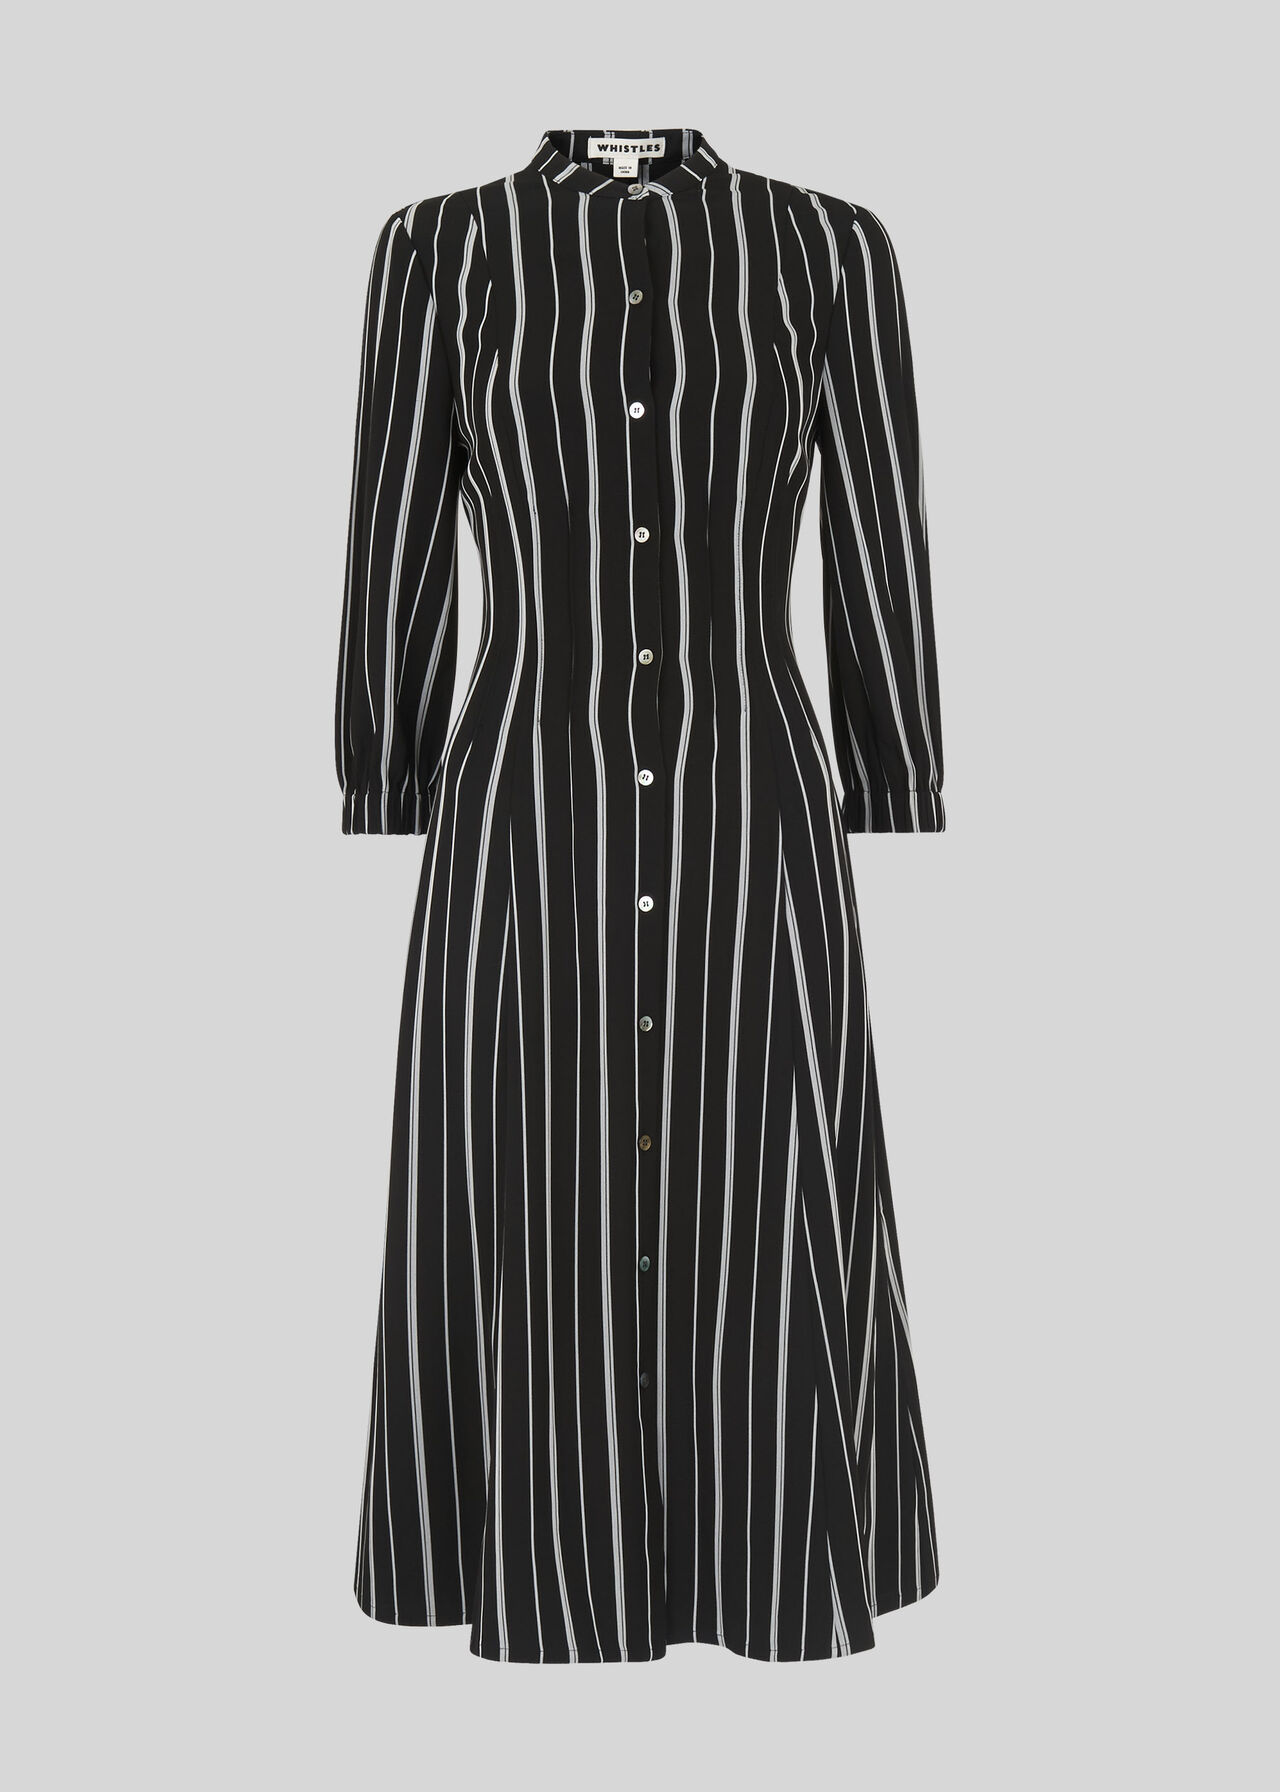 Leesa Stripe Shirt Dress Black and White